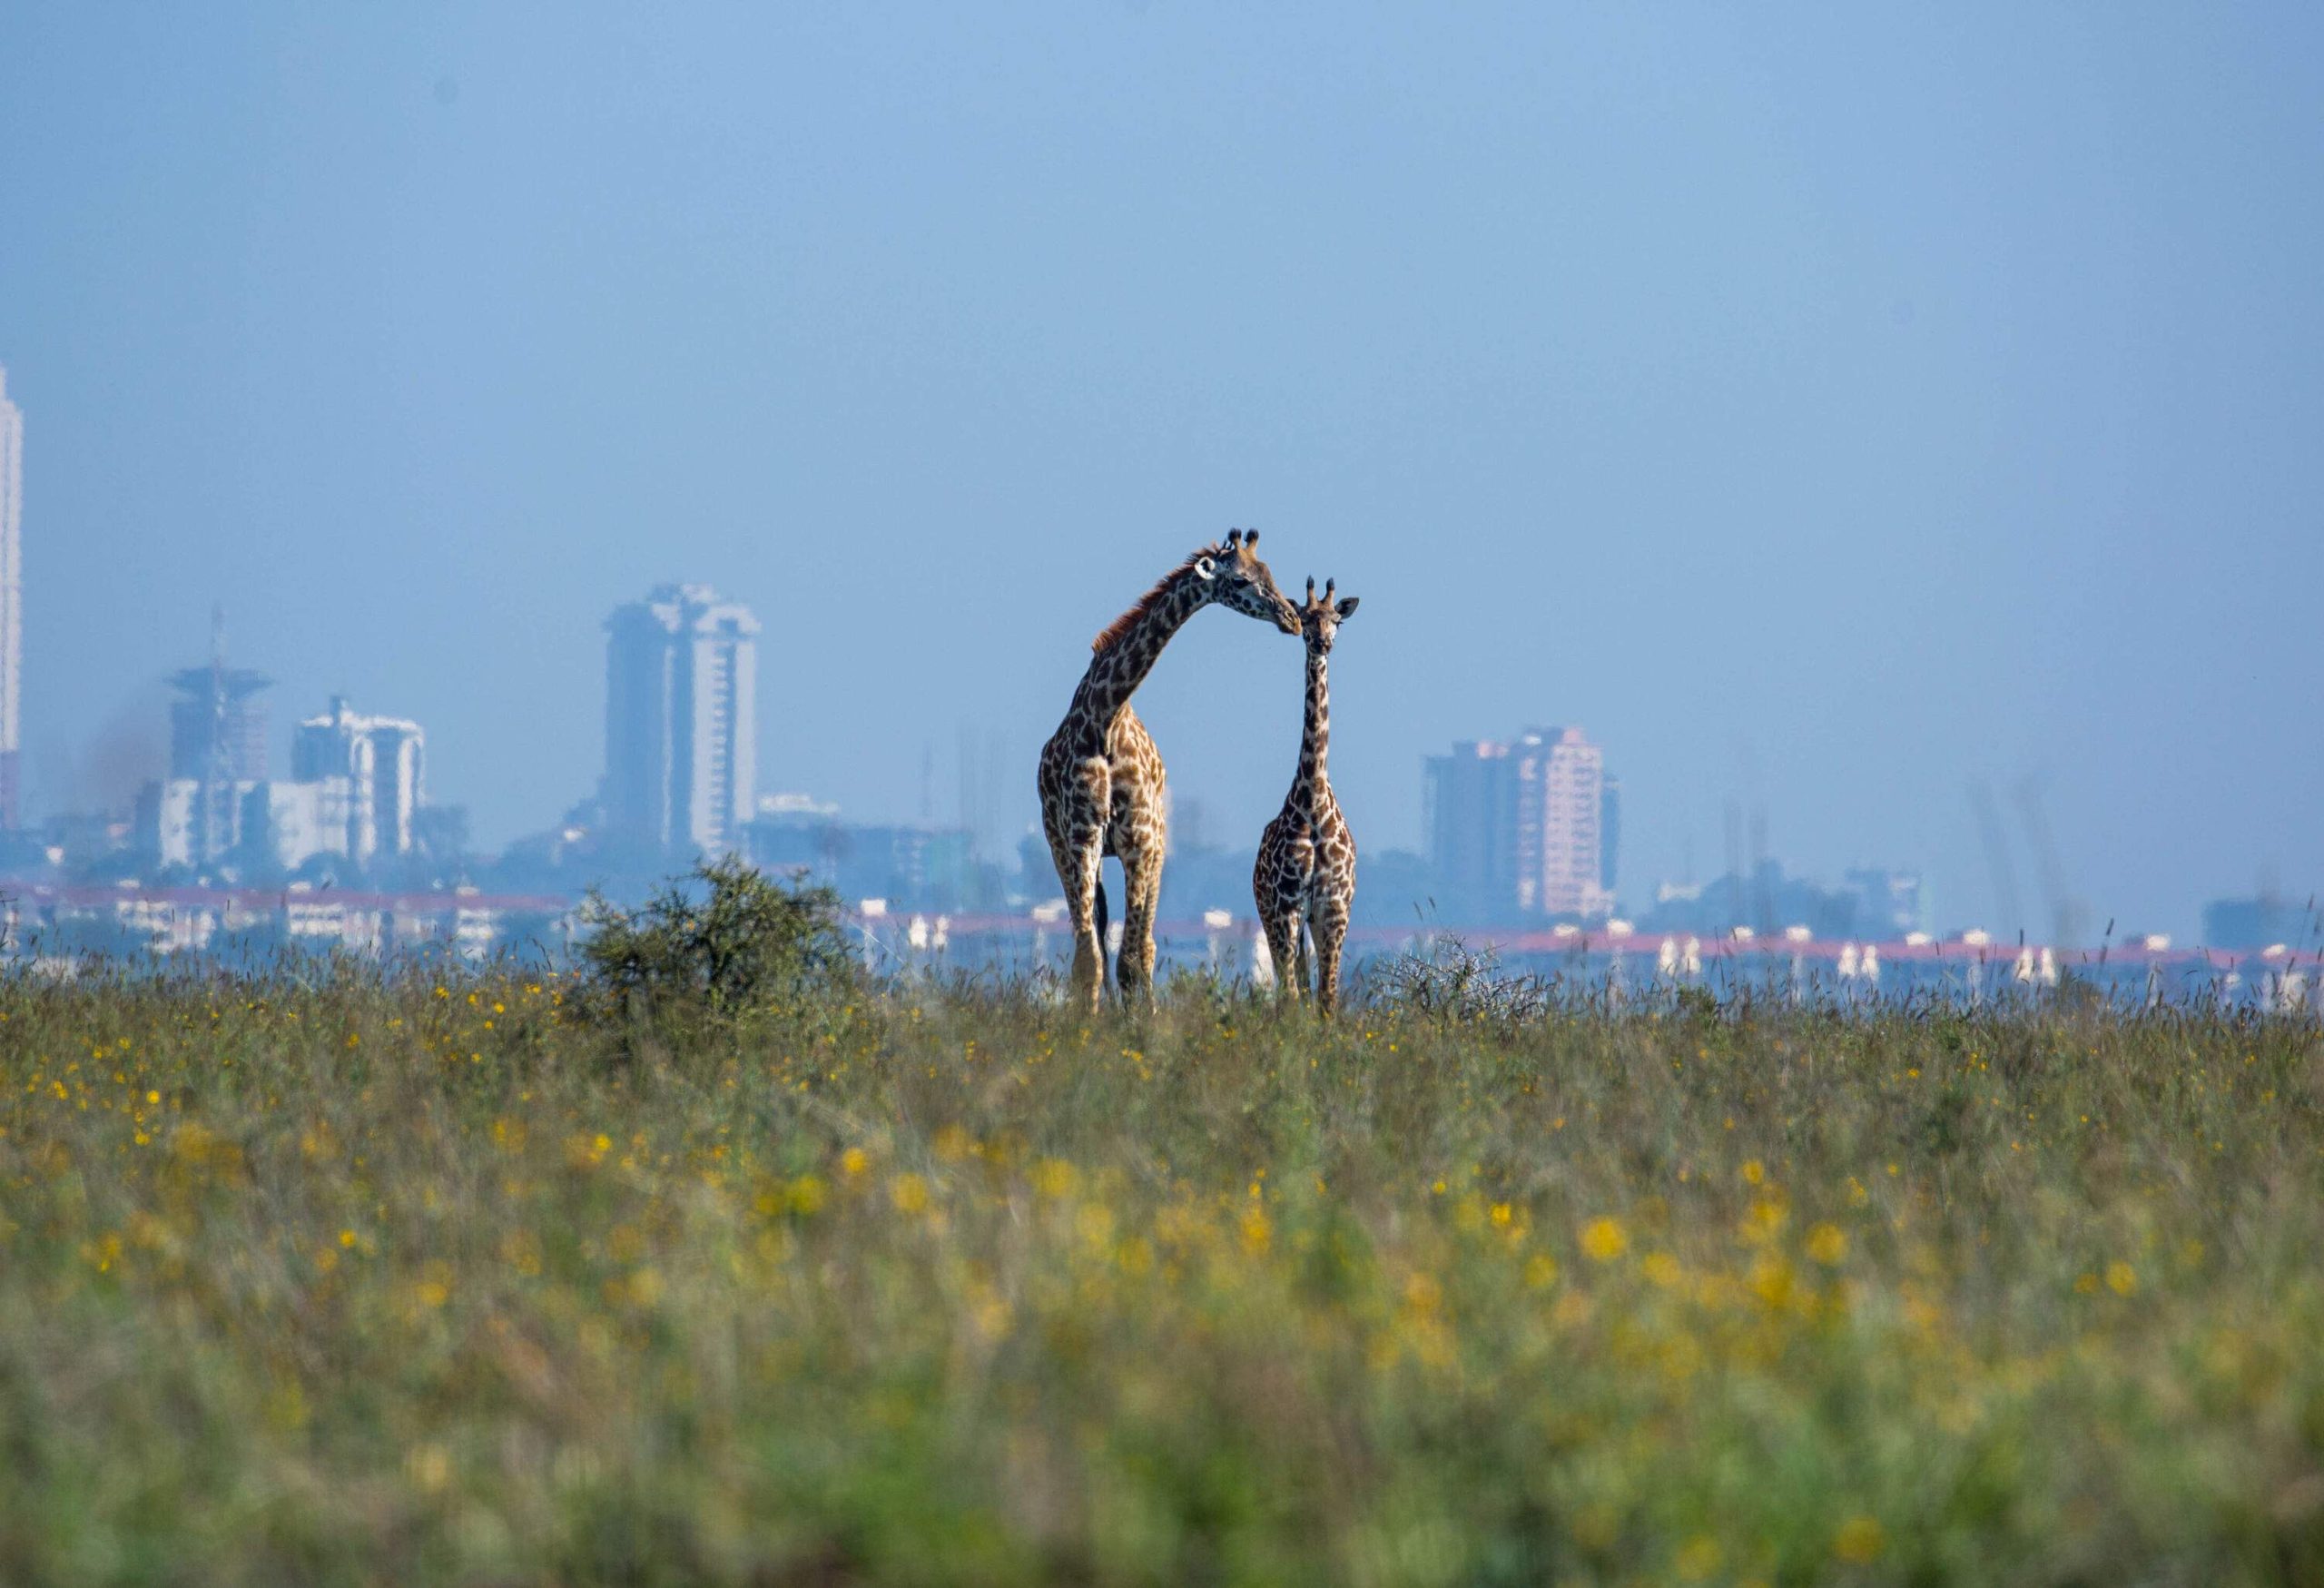 A Masai Giraffe (Giraffa camelopardalis tippelskirchii aka Kilimanjaro giraffe) and her calf in Nairobi National Park with the city in the background.